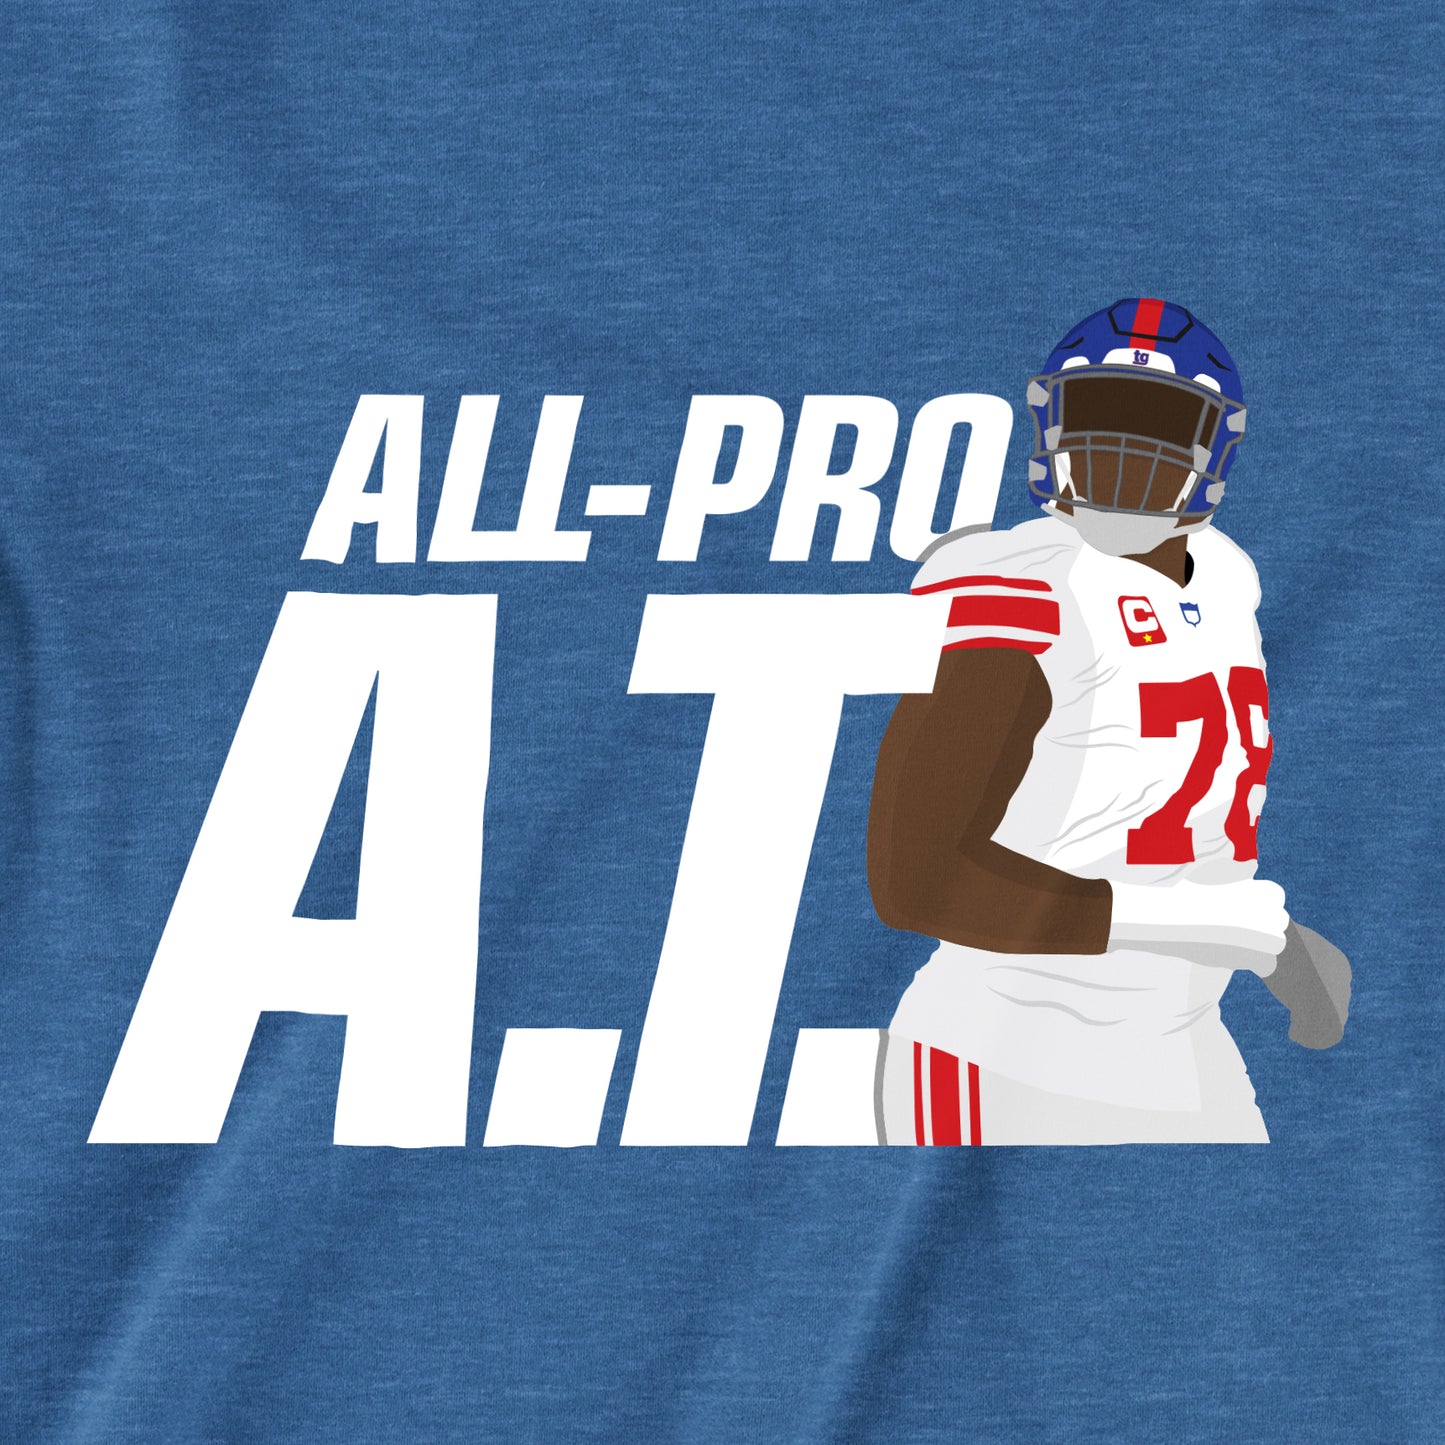 All-Pro A.T. | T-Shirt